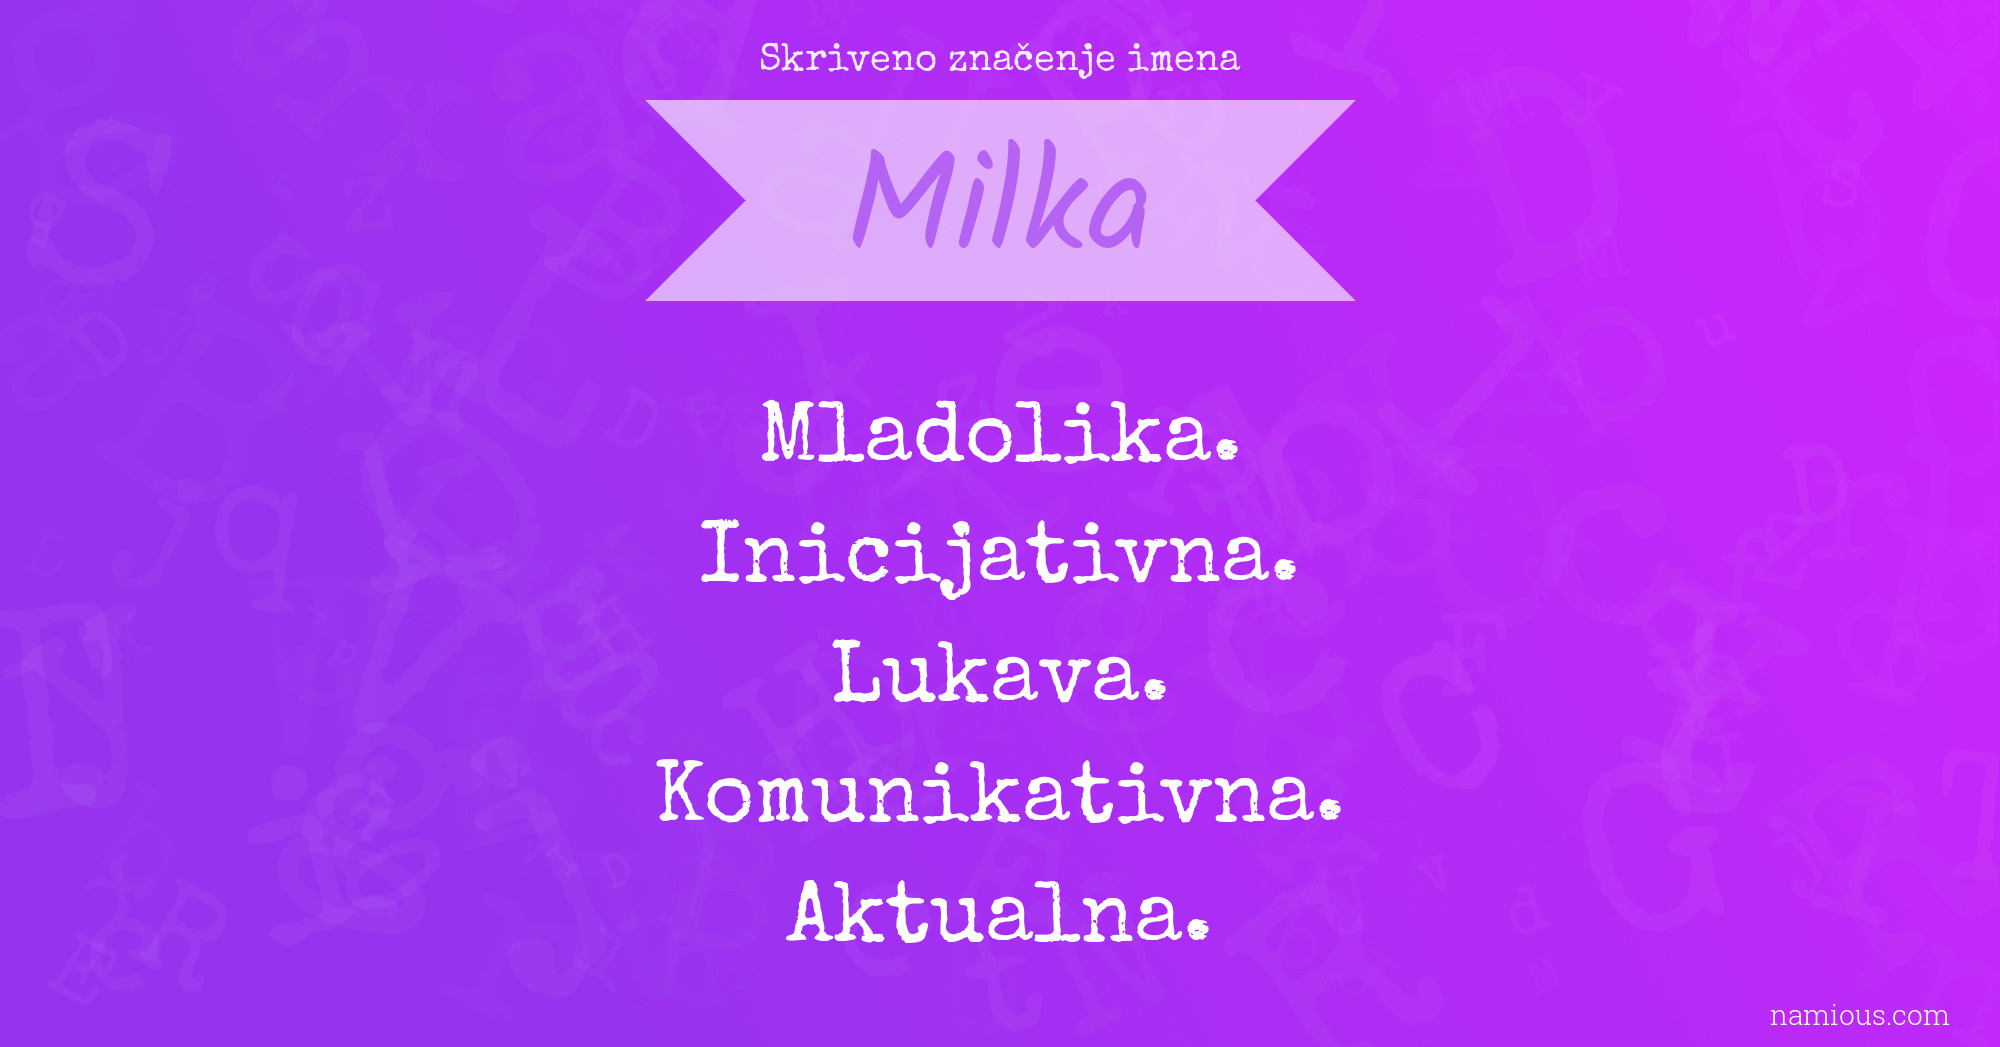 Skriveno značenje imena Milka